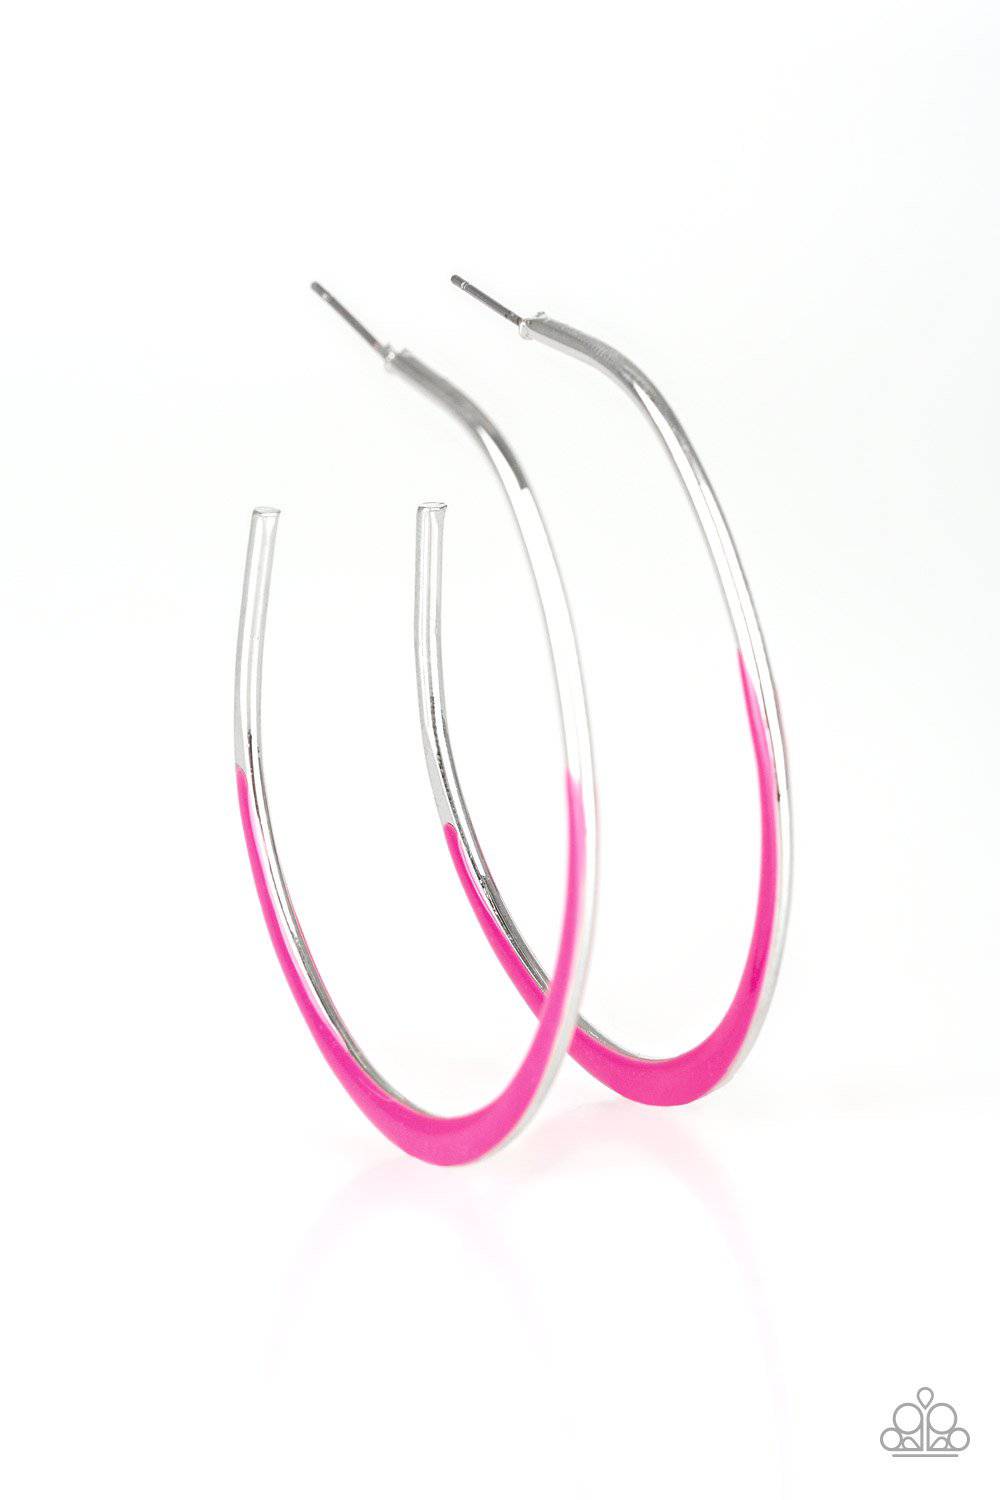 So Seren-DIP-itous - Pink & Silver Hoop Earrings - Paparazzi Accessories - GlaMarous Titi Jewels